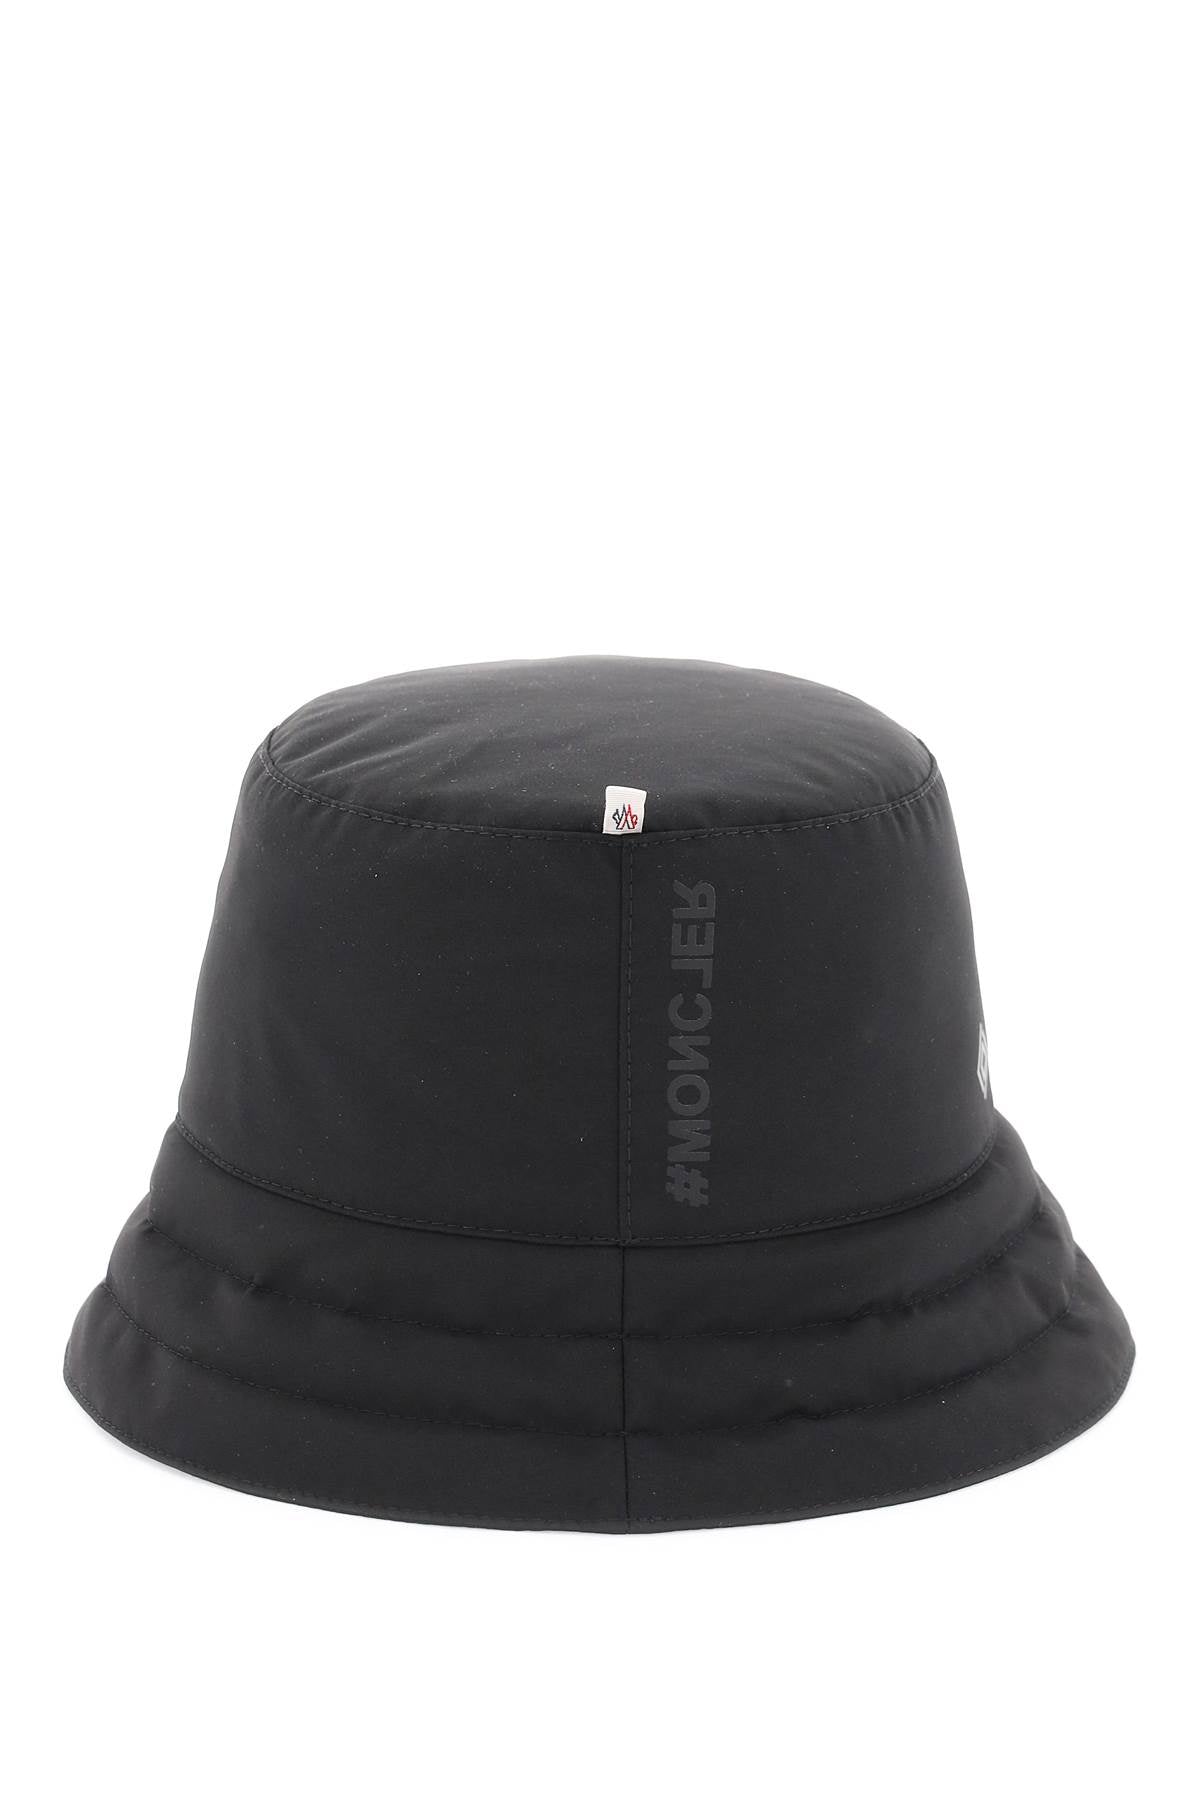 Moncler Grenoble bucket hat in gore-tex 3l 3B00005596Y4999